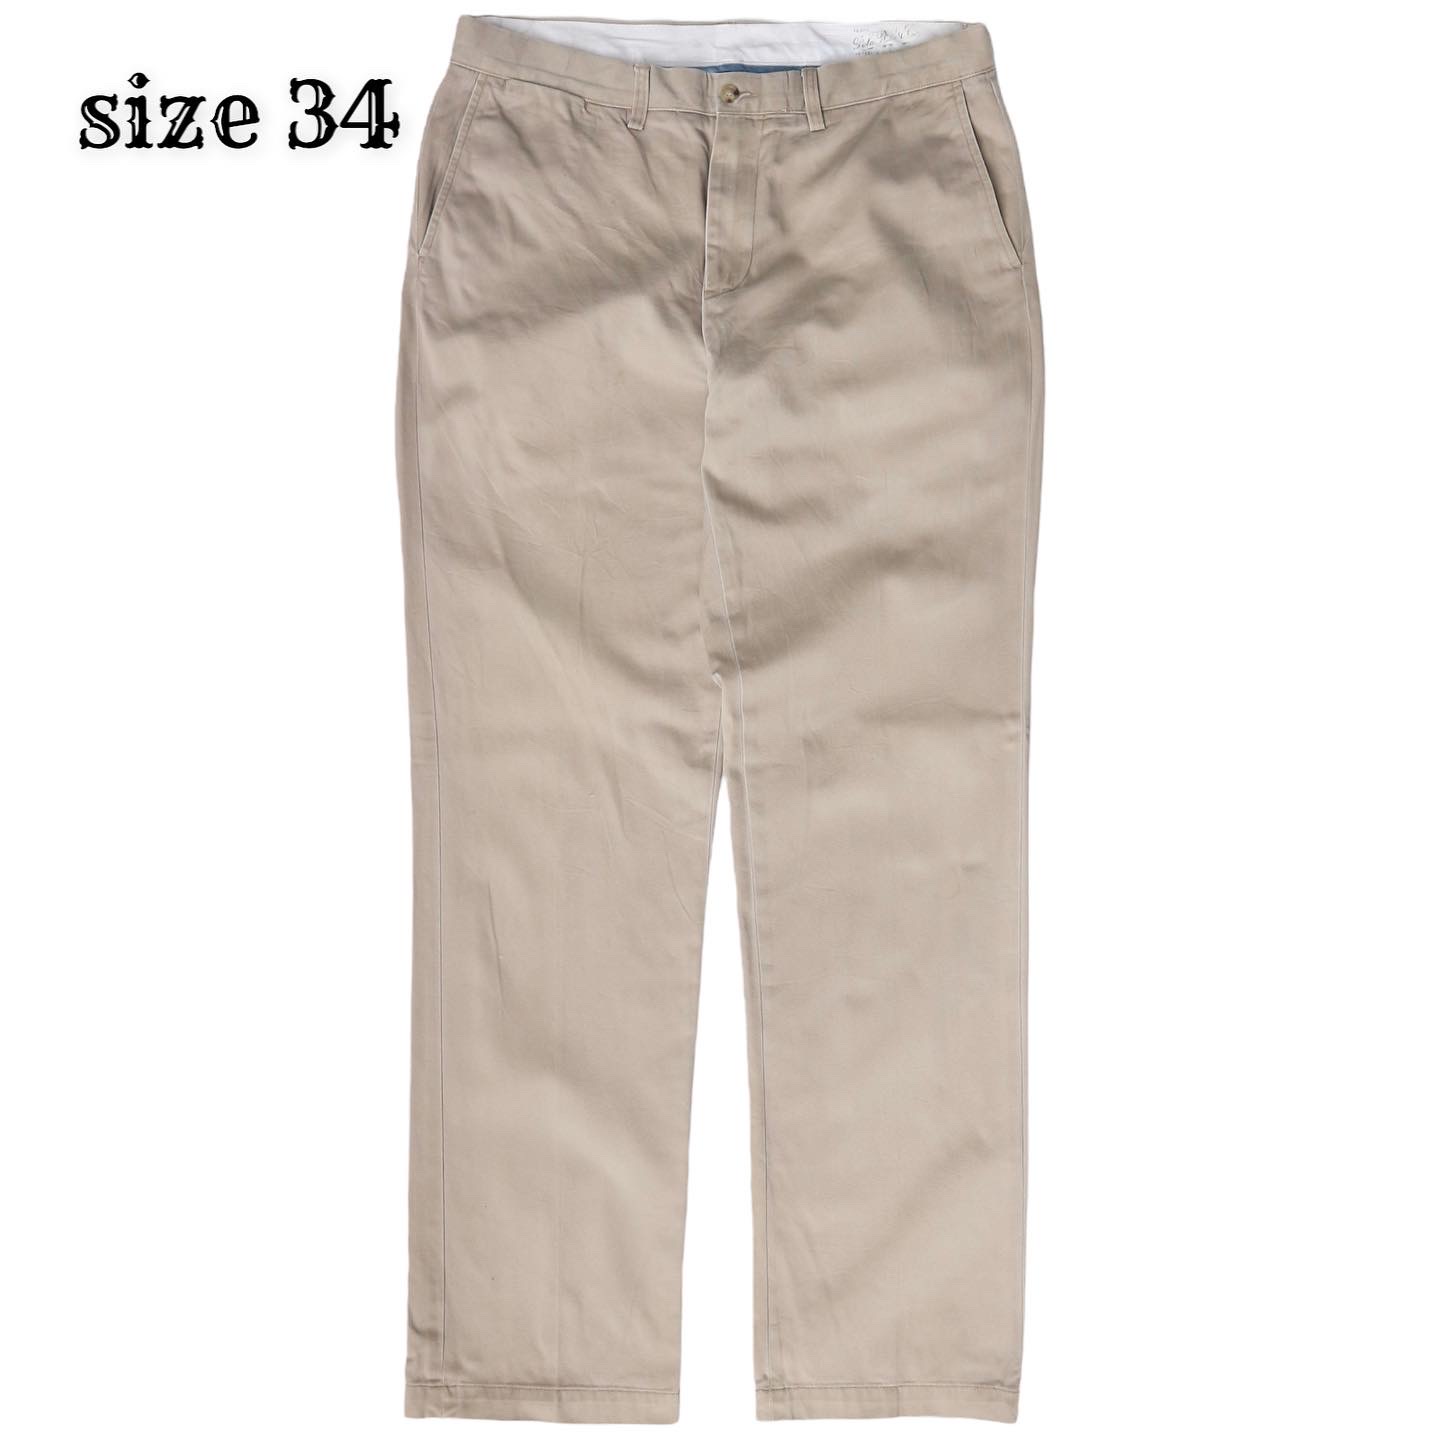 Polo by Ralph Lauren Khaki Pants Size 34 denimister